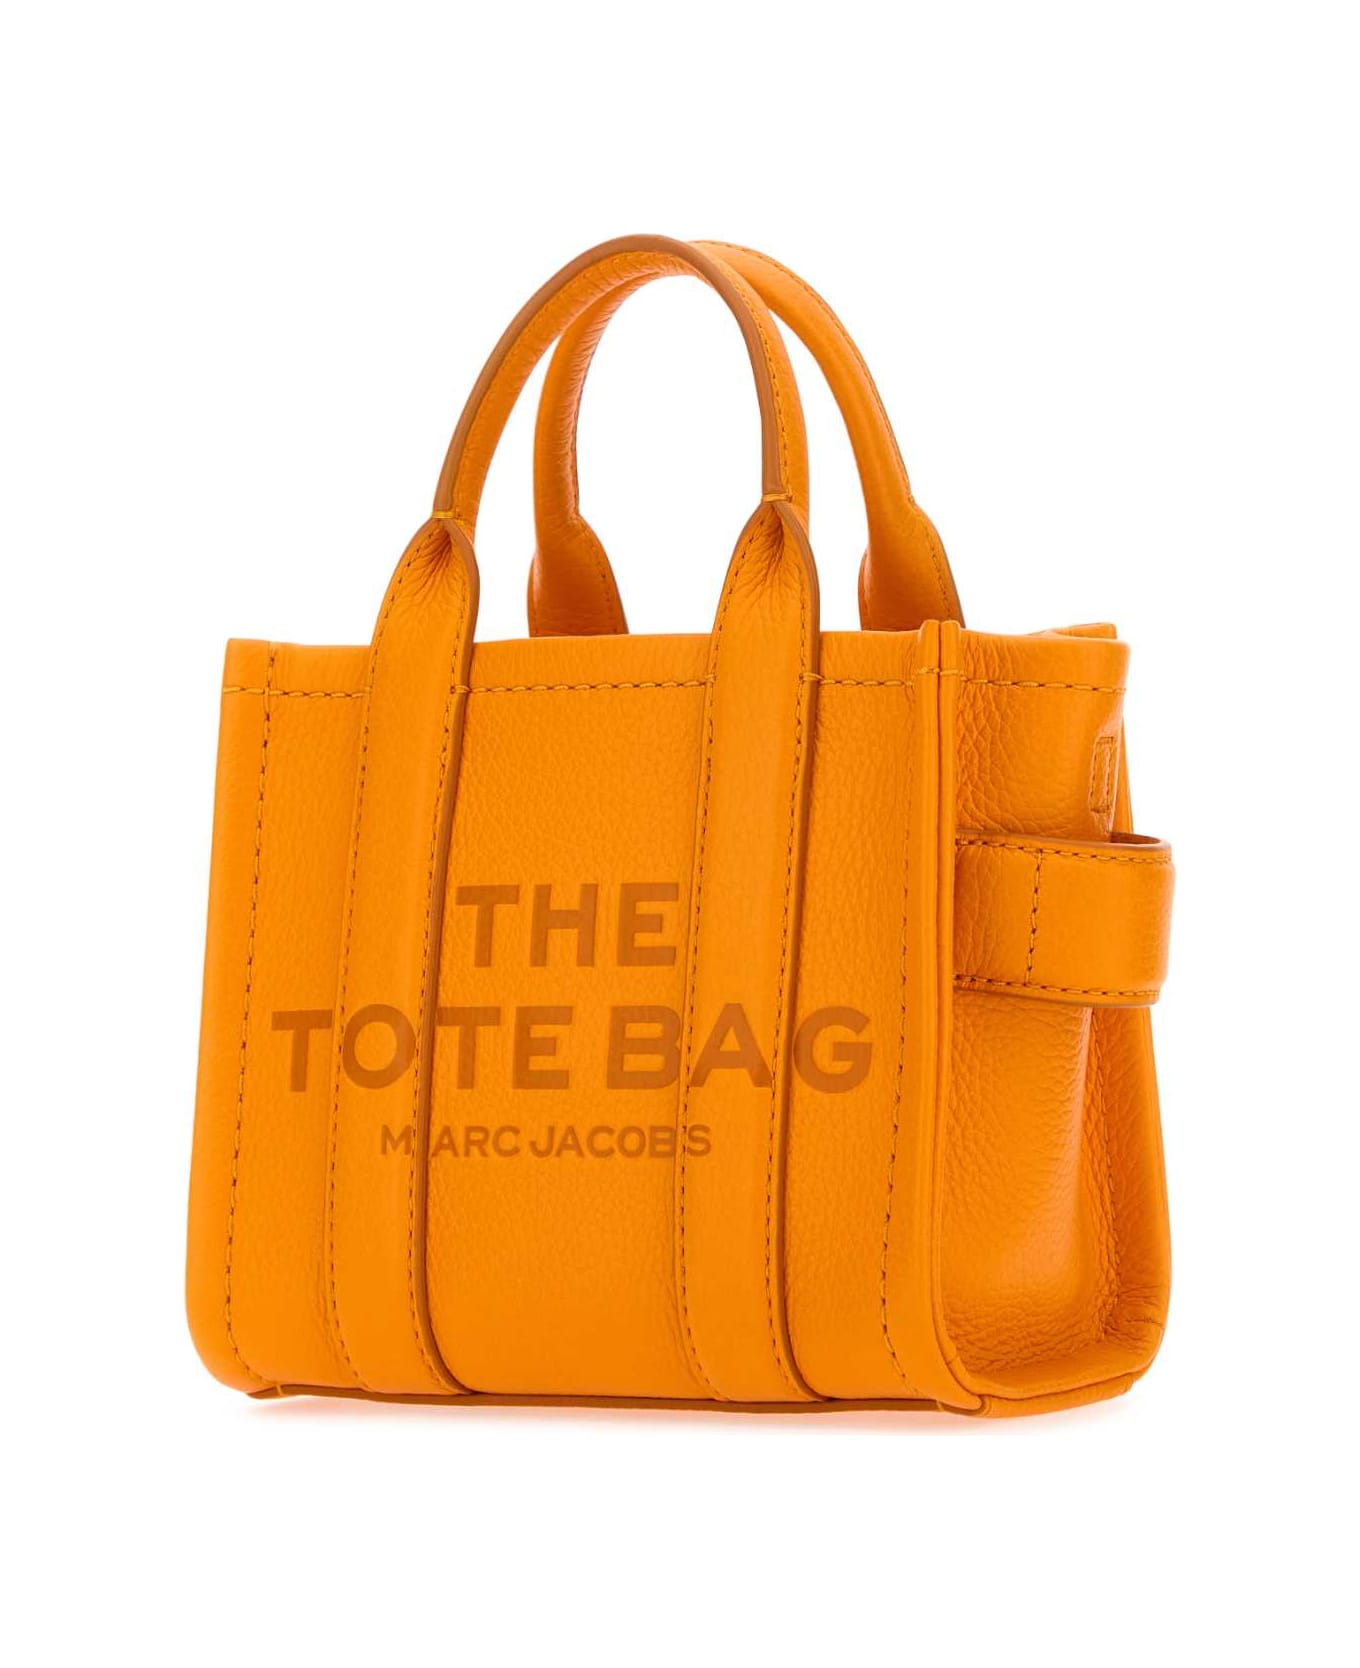 Marc Jacobs Orange Leather Micro The Tote Bag Handbag - TANGERINE トートバッグ